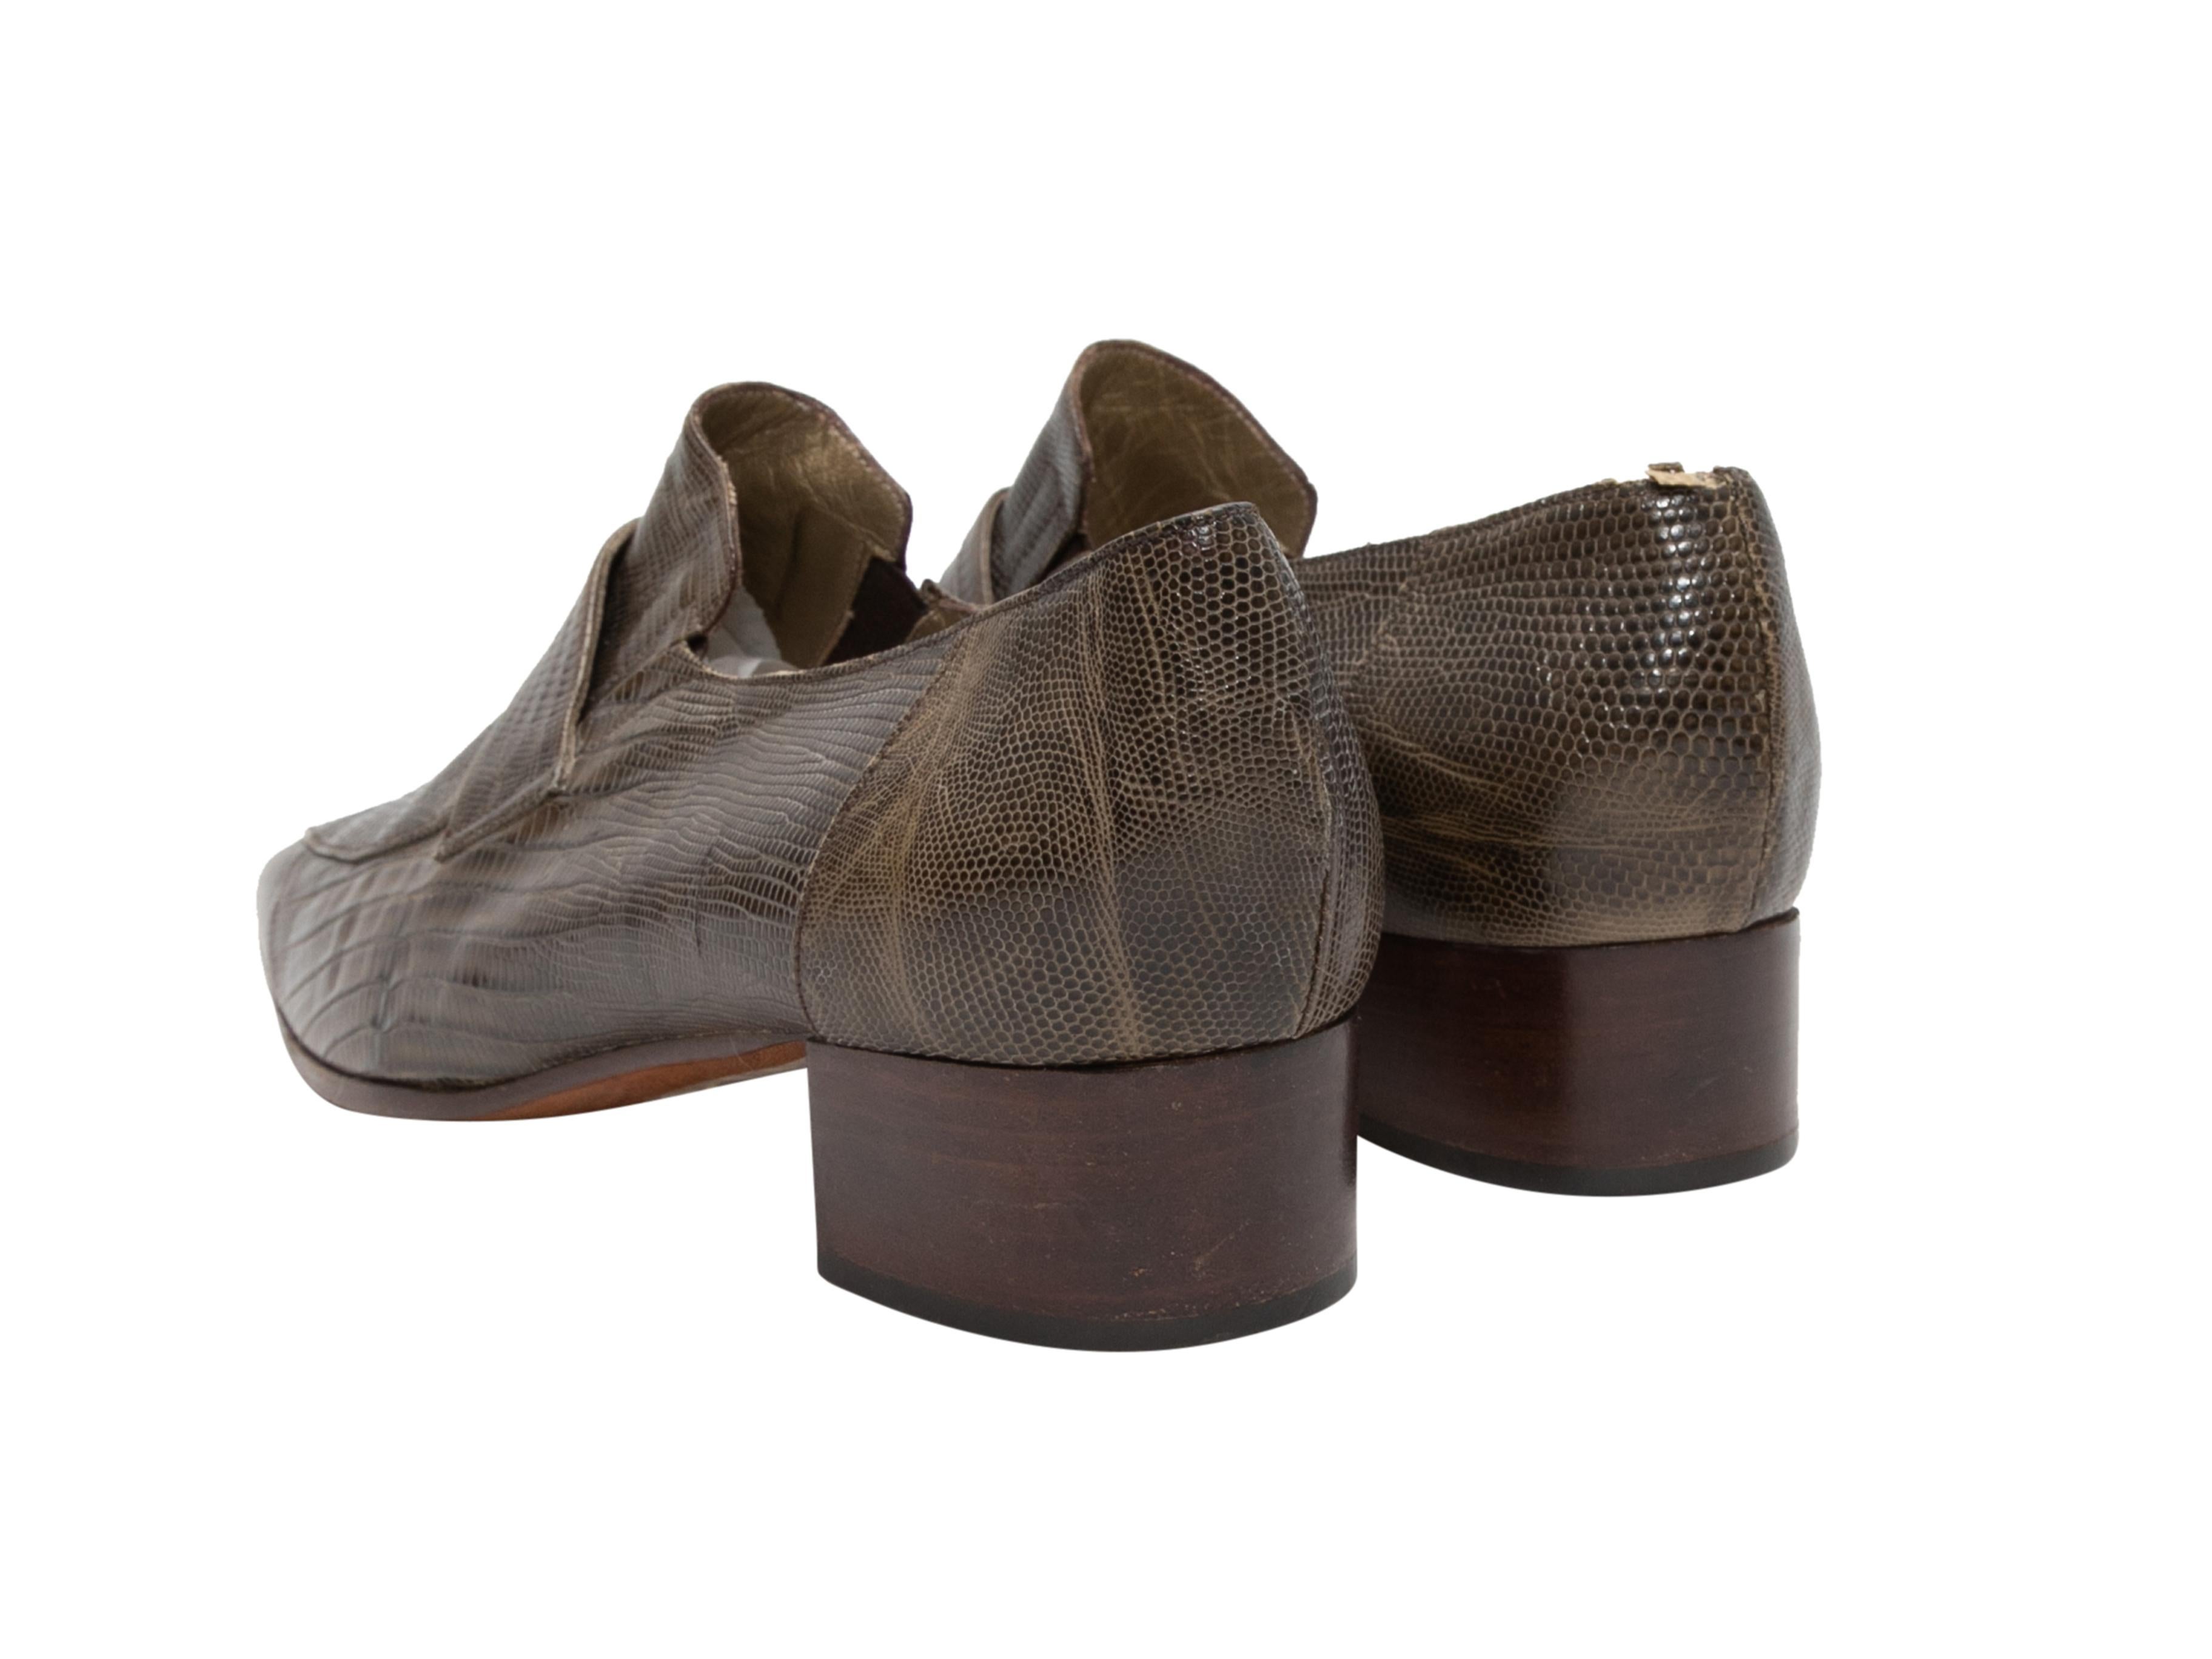 Vintage Olive Yves Saint Laurent Lizard Loafers Size 37 1